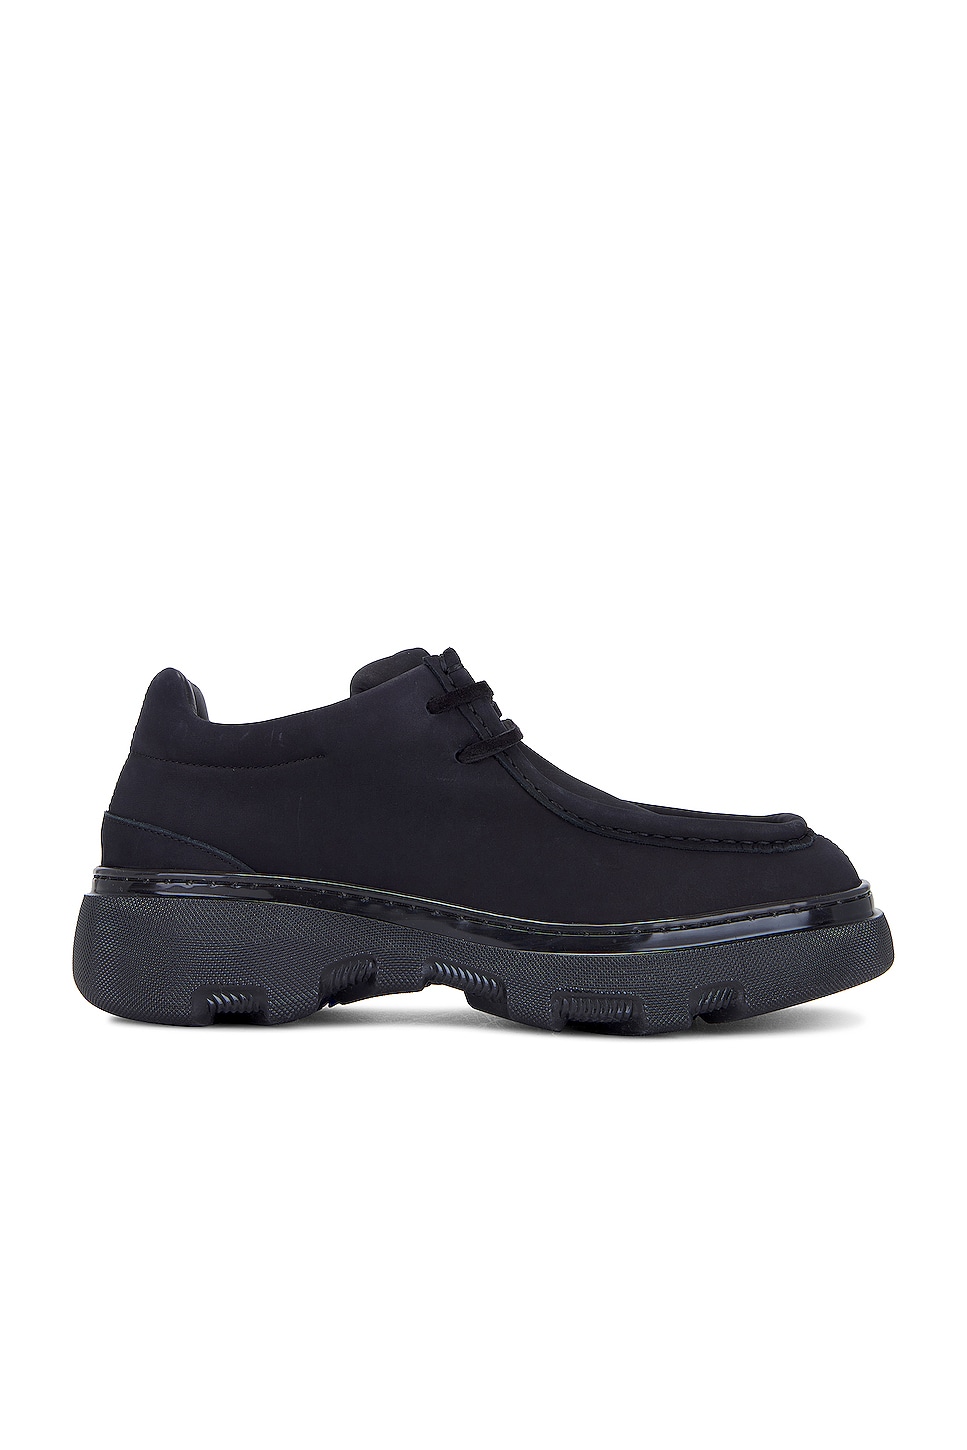 Burberry Creeper Sneaker in Black | FWRD